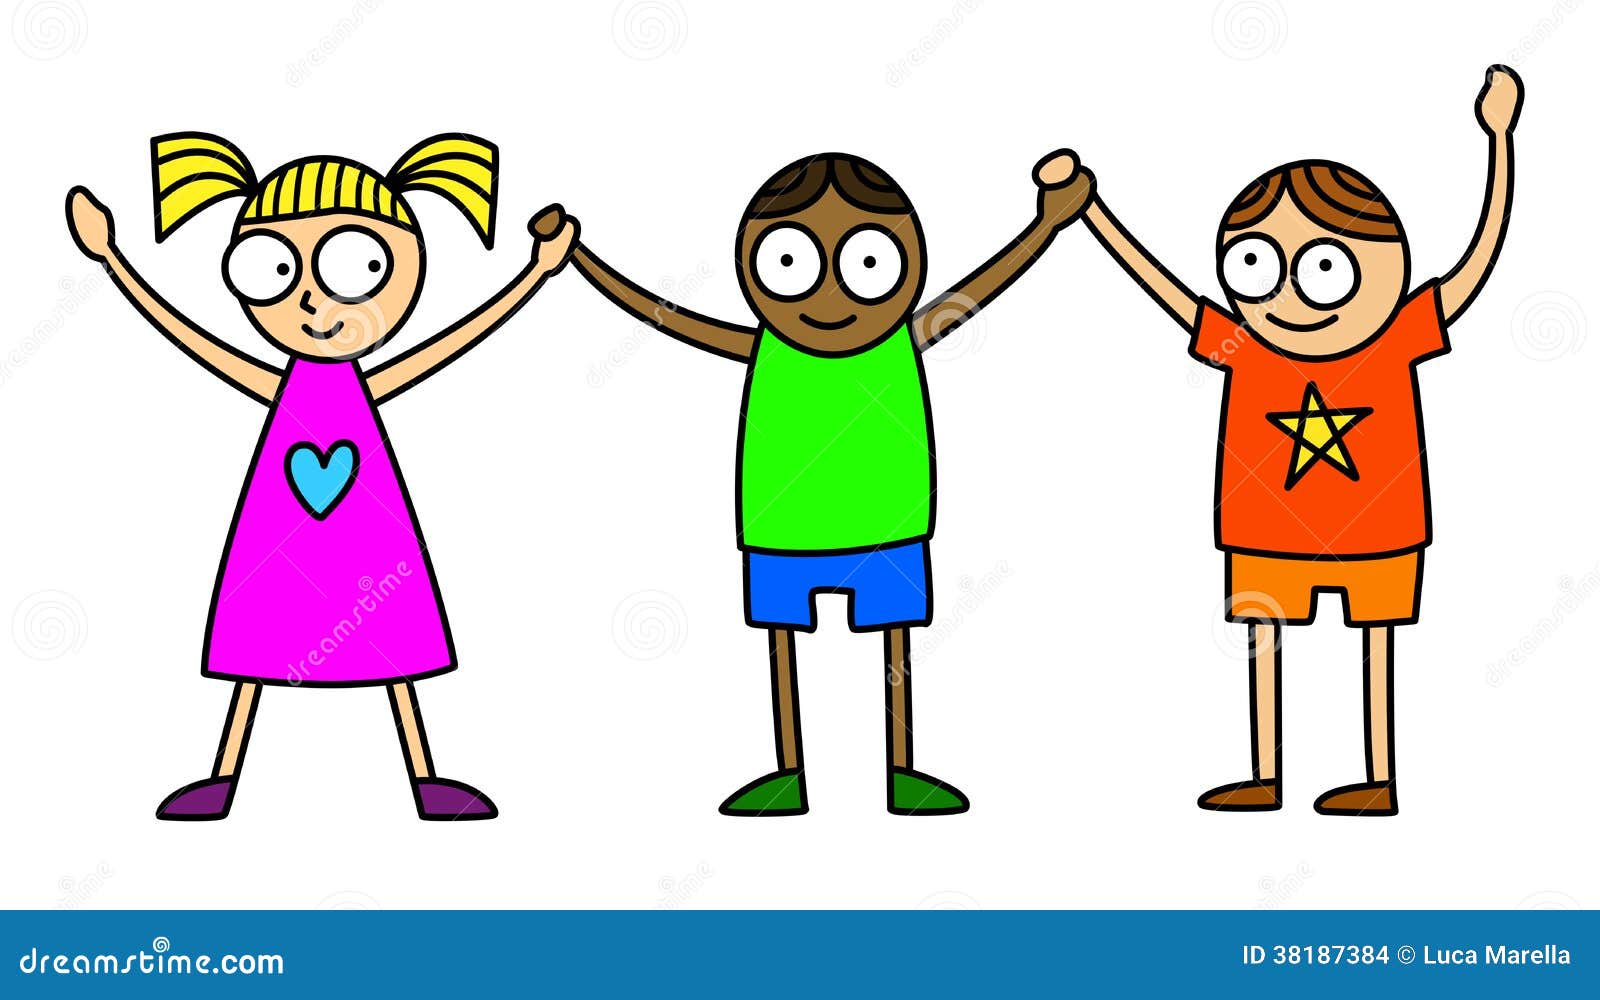 Friends children stock illustration. Illustration of childlike - 38187384